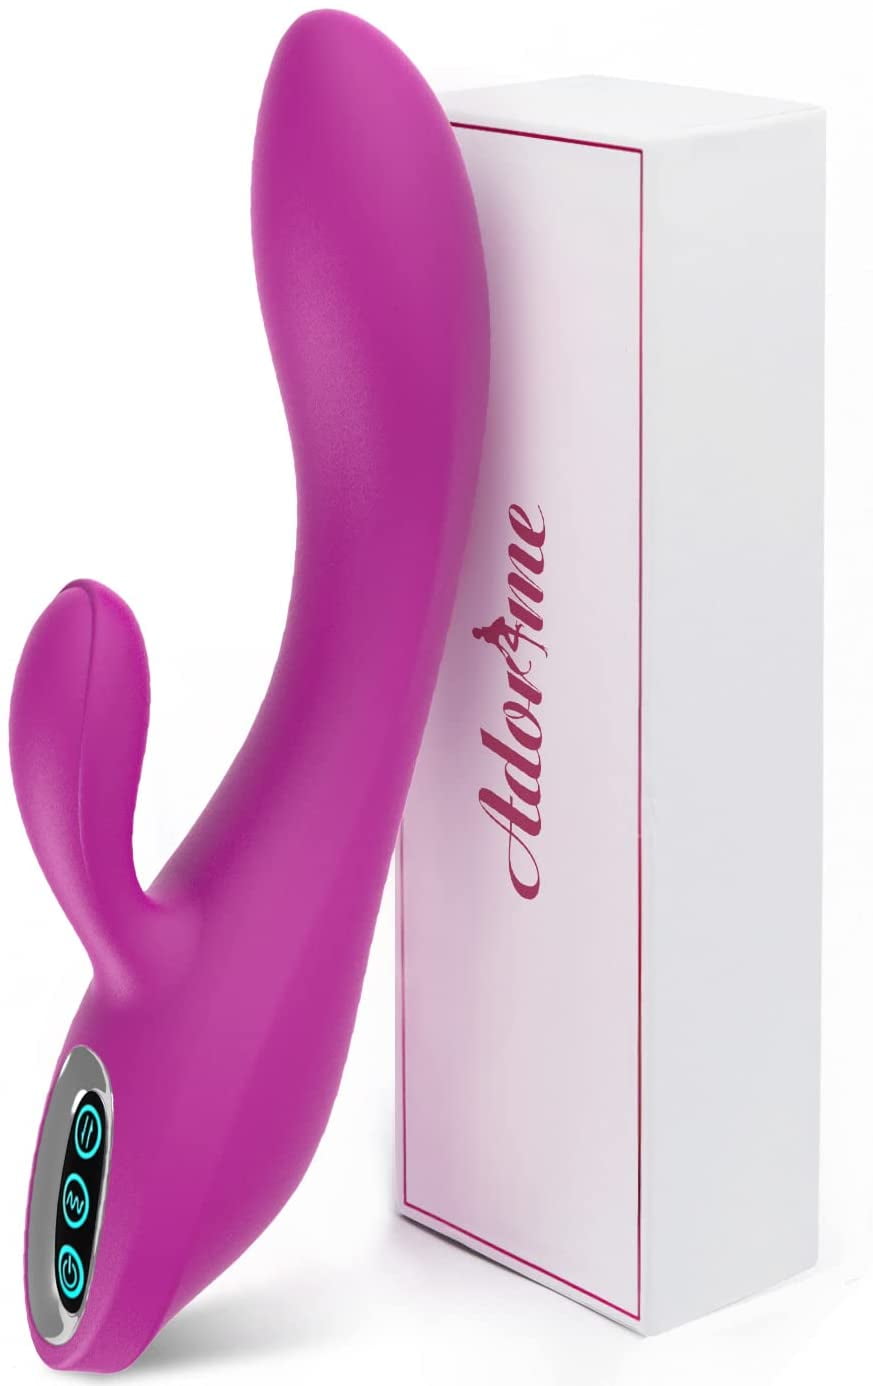 Sientice G-Spot Rabbit Vibrator Clitoris Stimulator Silicone Vaginal Anal Dildo Massager for Women Maturbation, Sex Toys for Couples Sex Things(Purple)